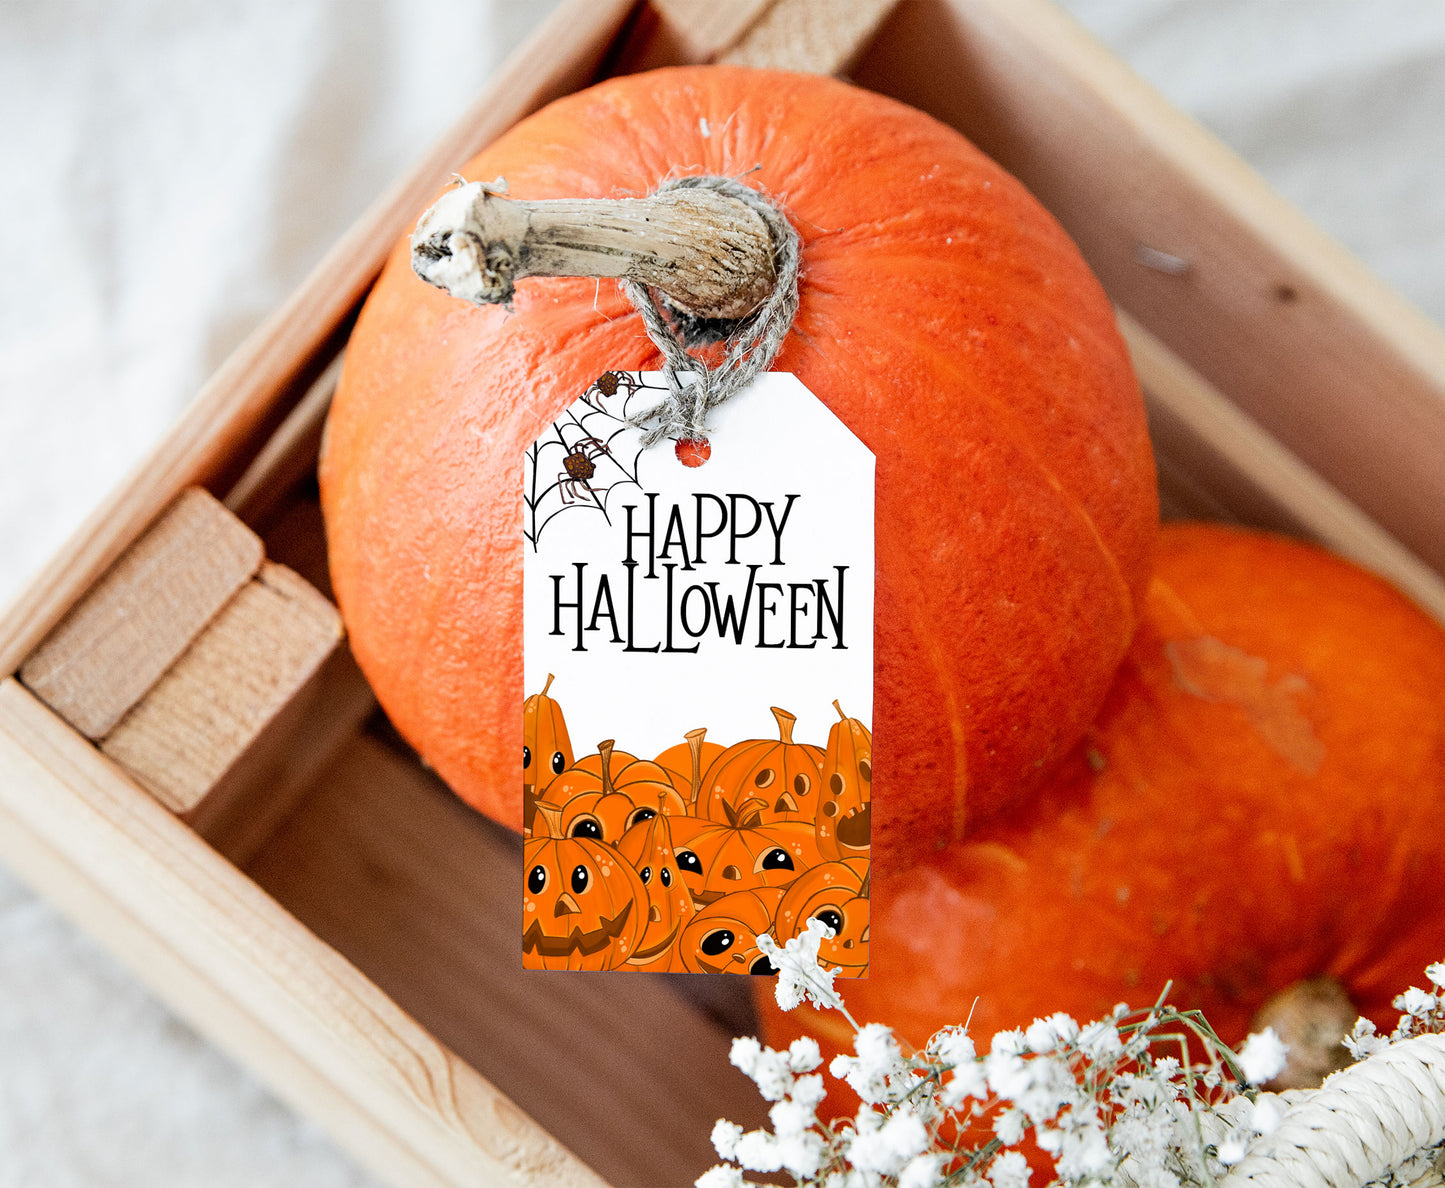 Happy Halloween Tags | Pumpkin Favor Tags - 115J